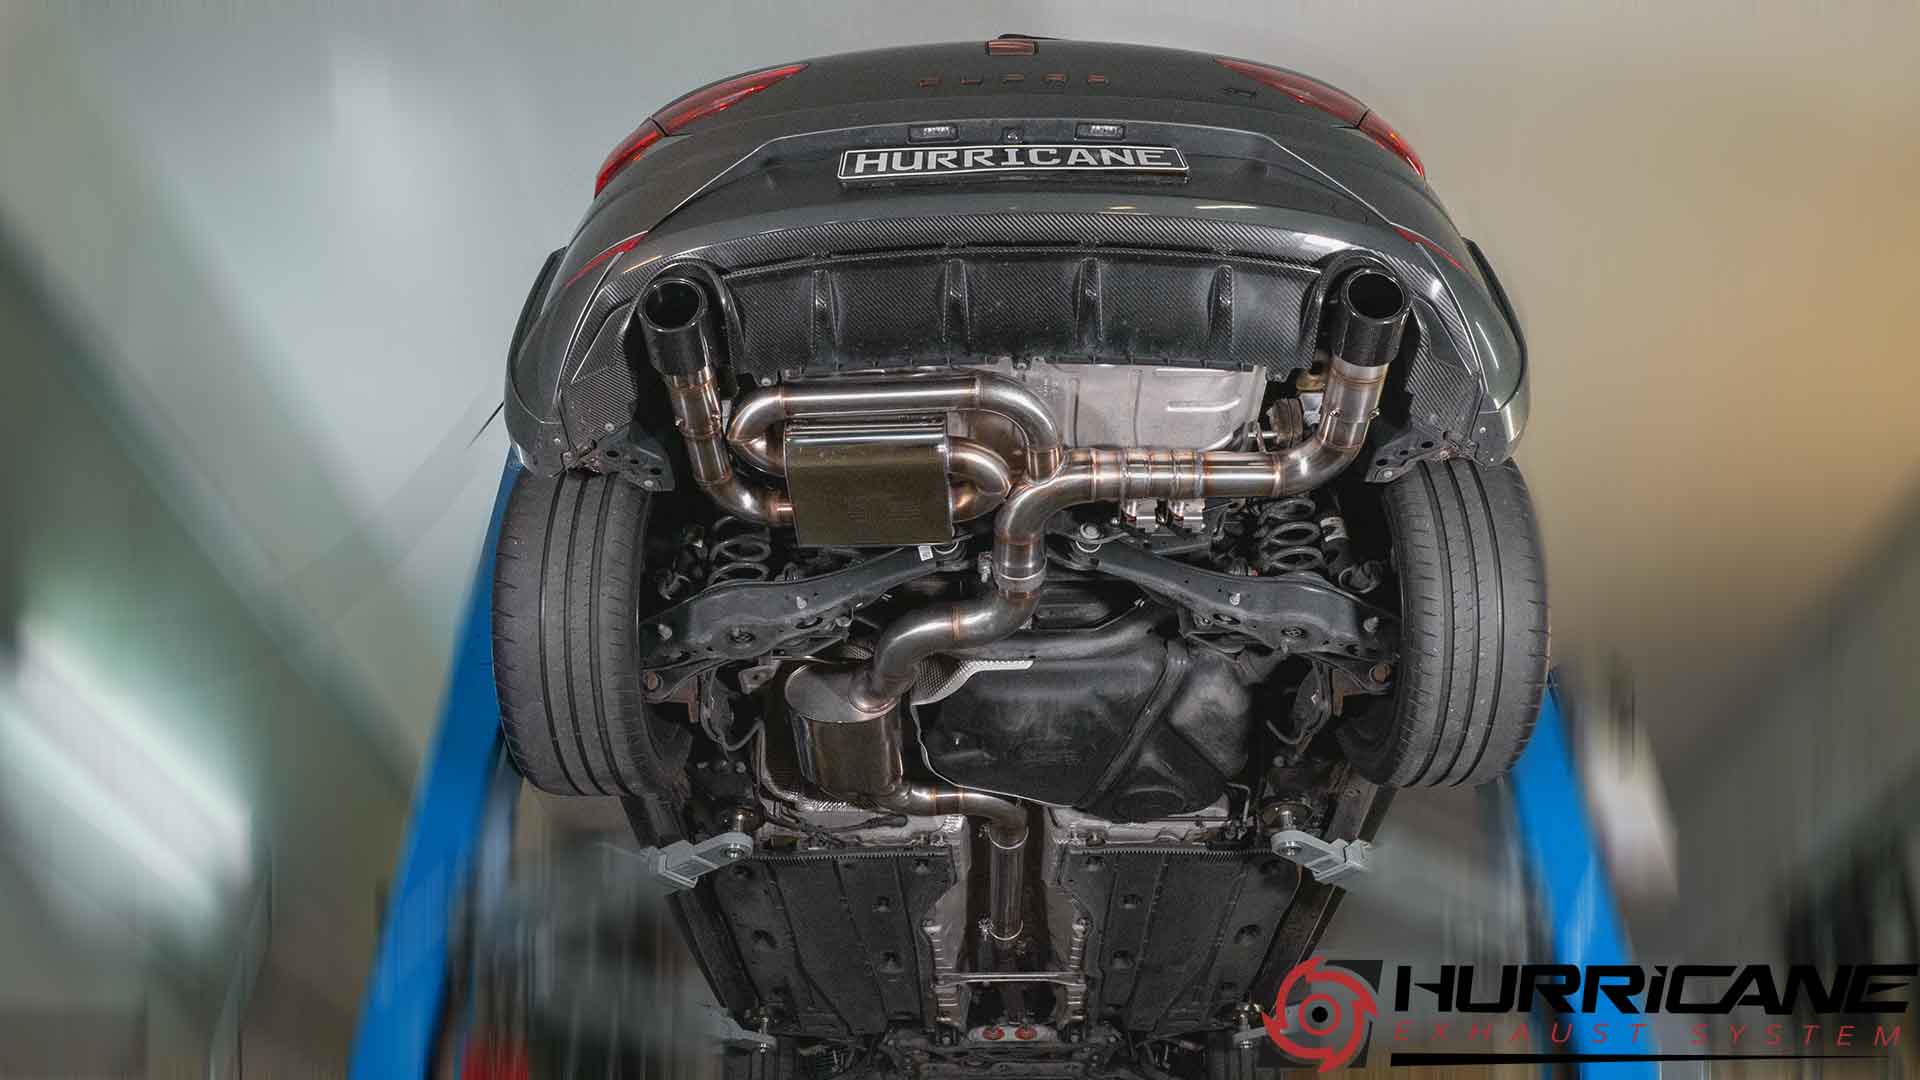 Hurricane 3,5" Auspuffanlage für Seat Leon Cupra R 310 PS Limited Edition 5F V3